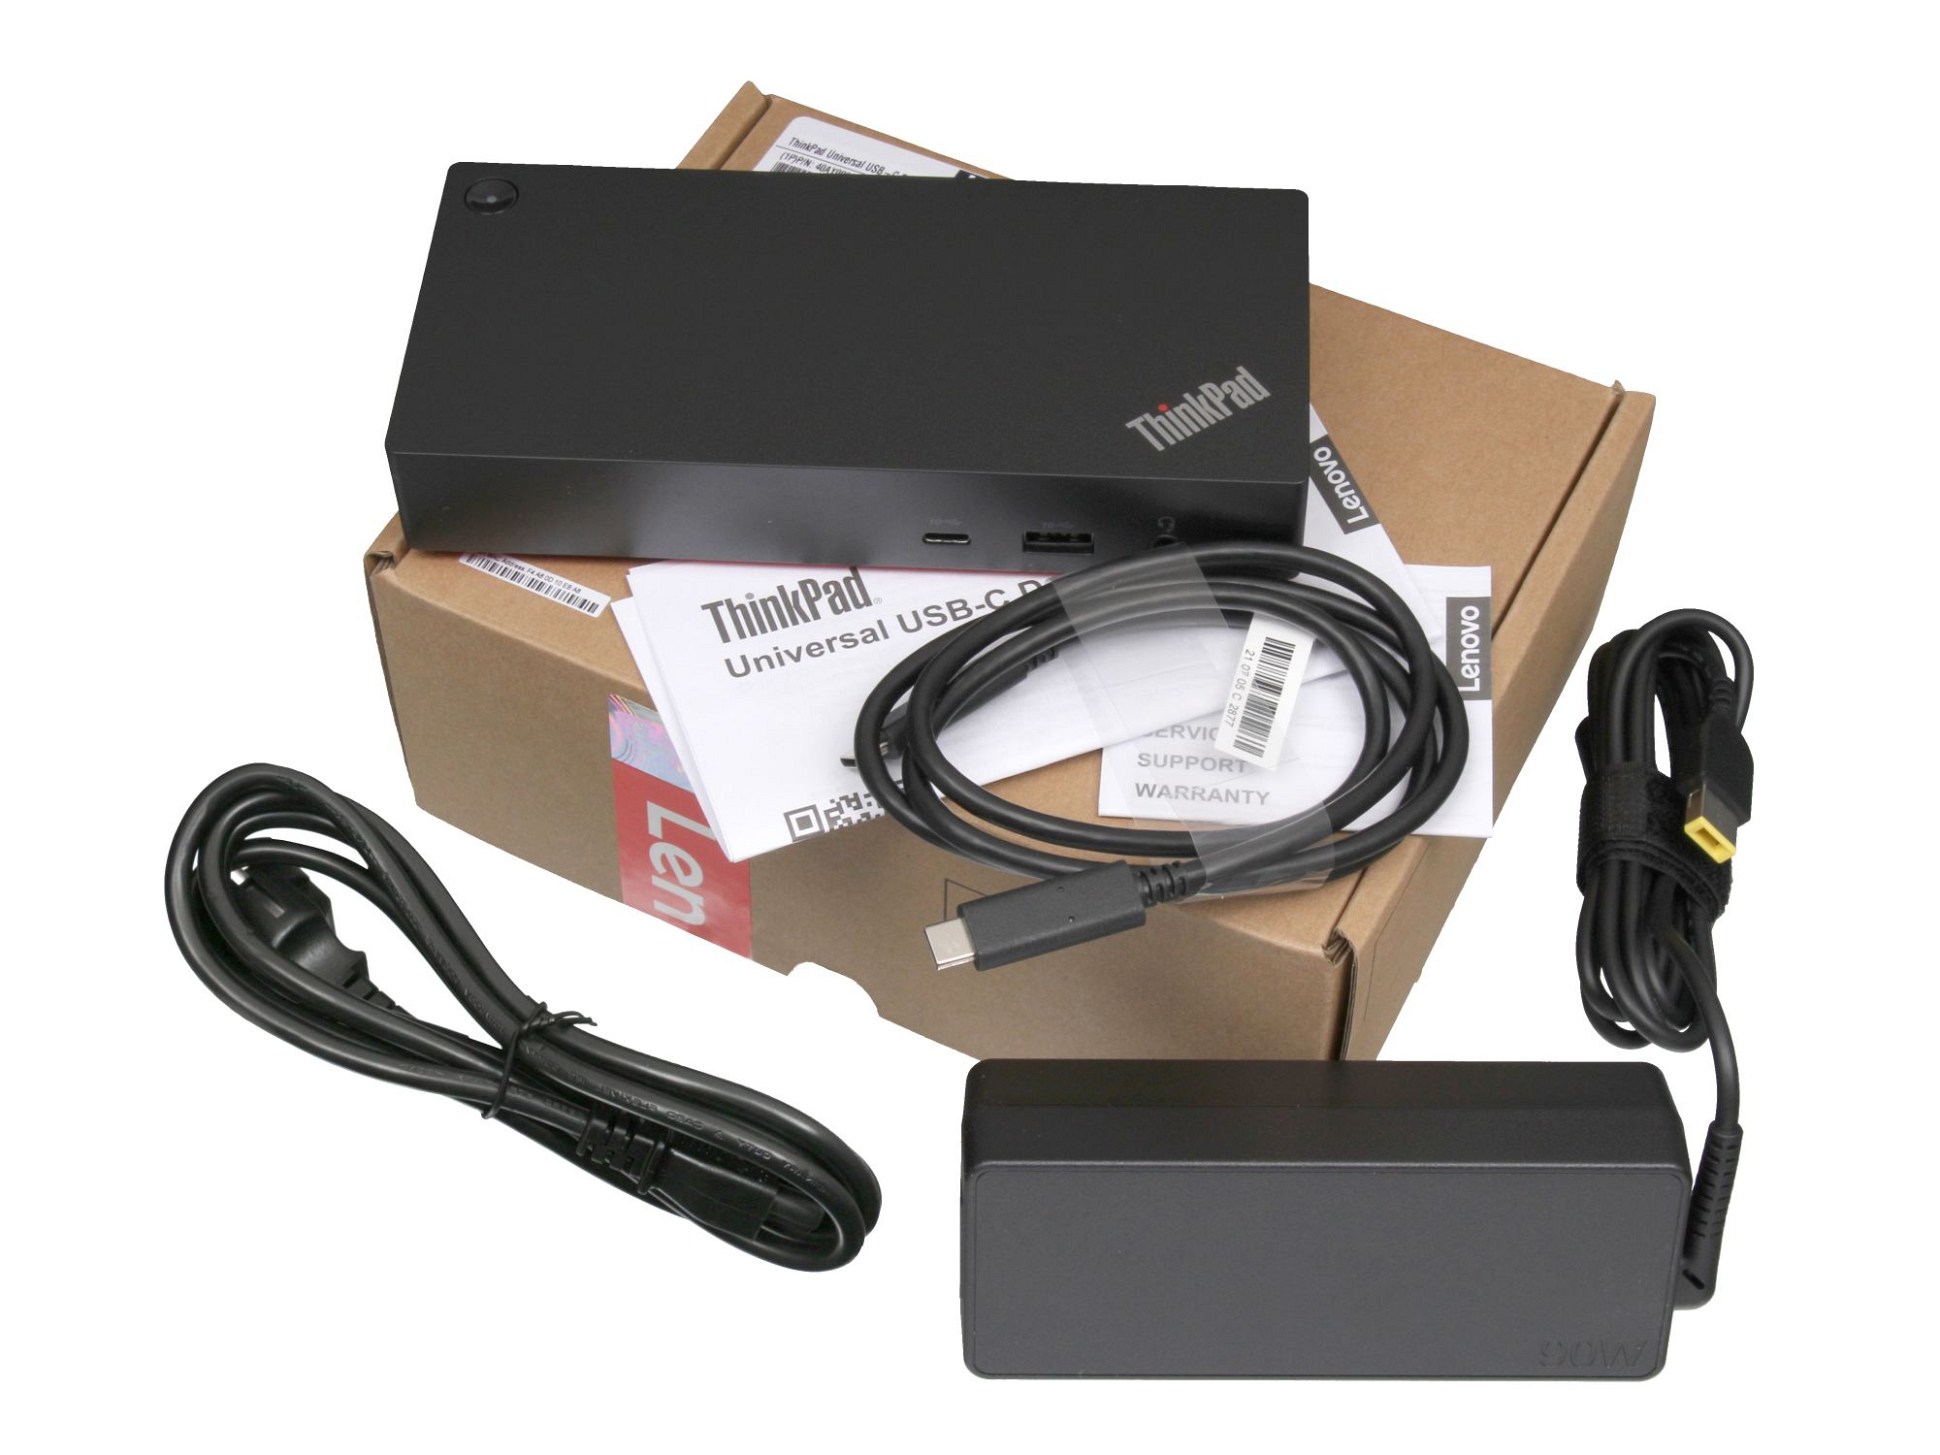 PR003L Lenovo ThinkPad Universal USB-C Dock inkl. 90W Netzteil